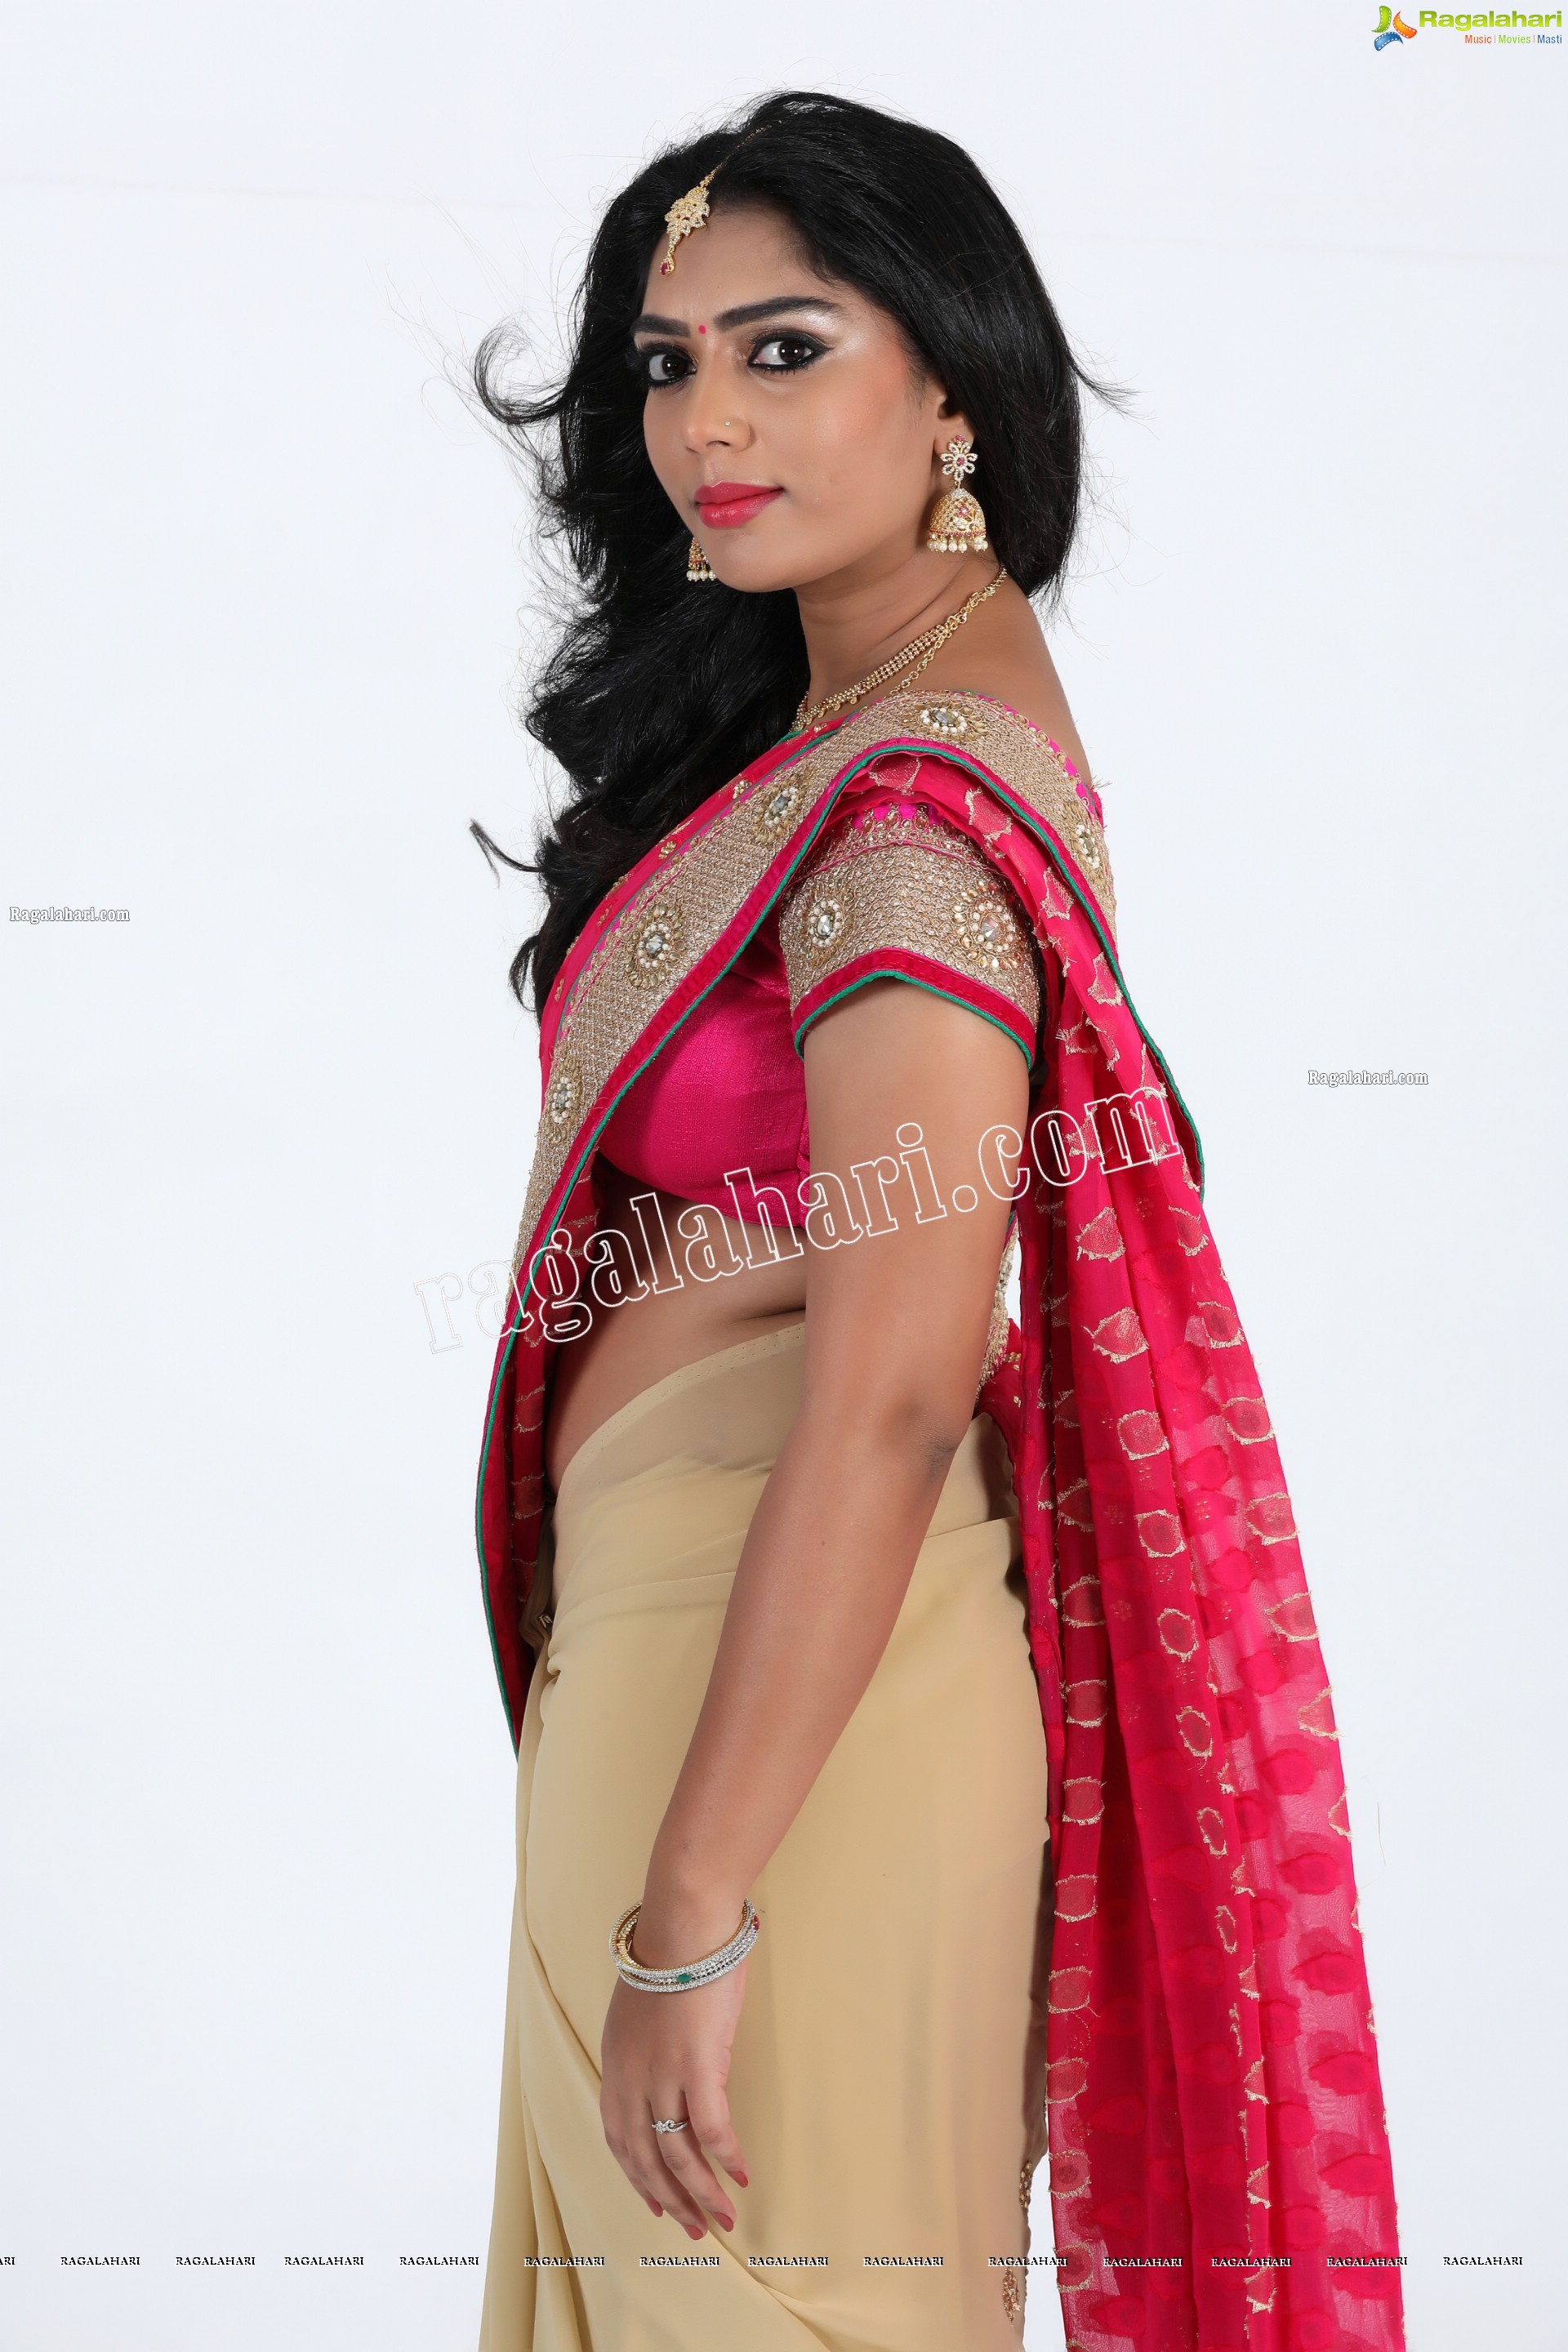 Lasya Sri in Pink and Cream Designer Saree, Exclusive Photo Shoot